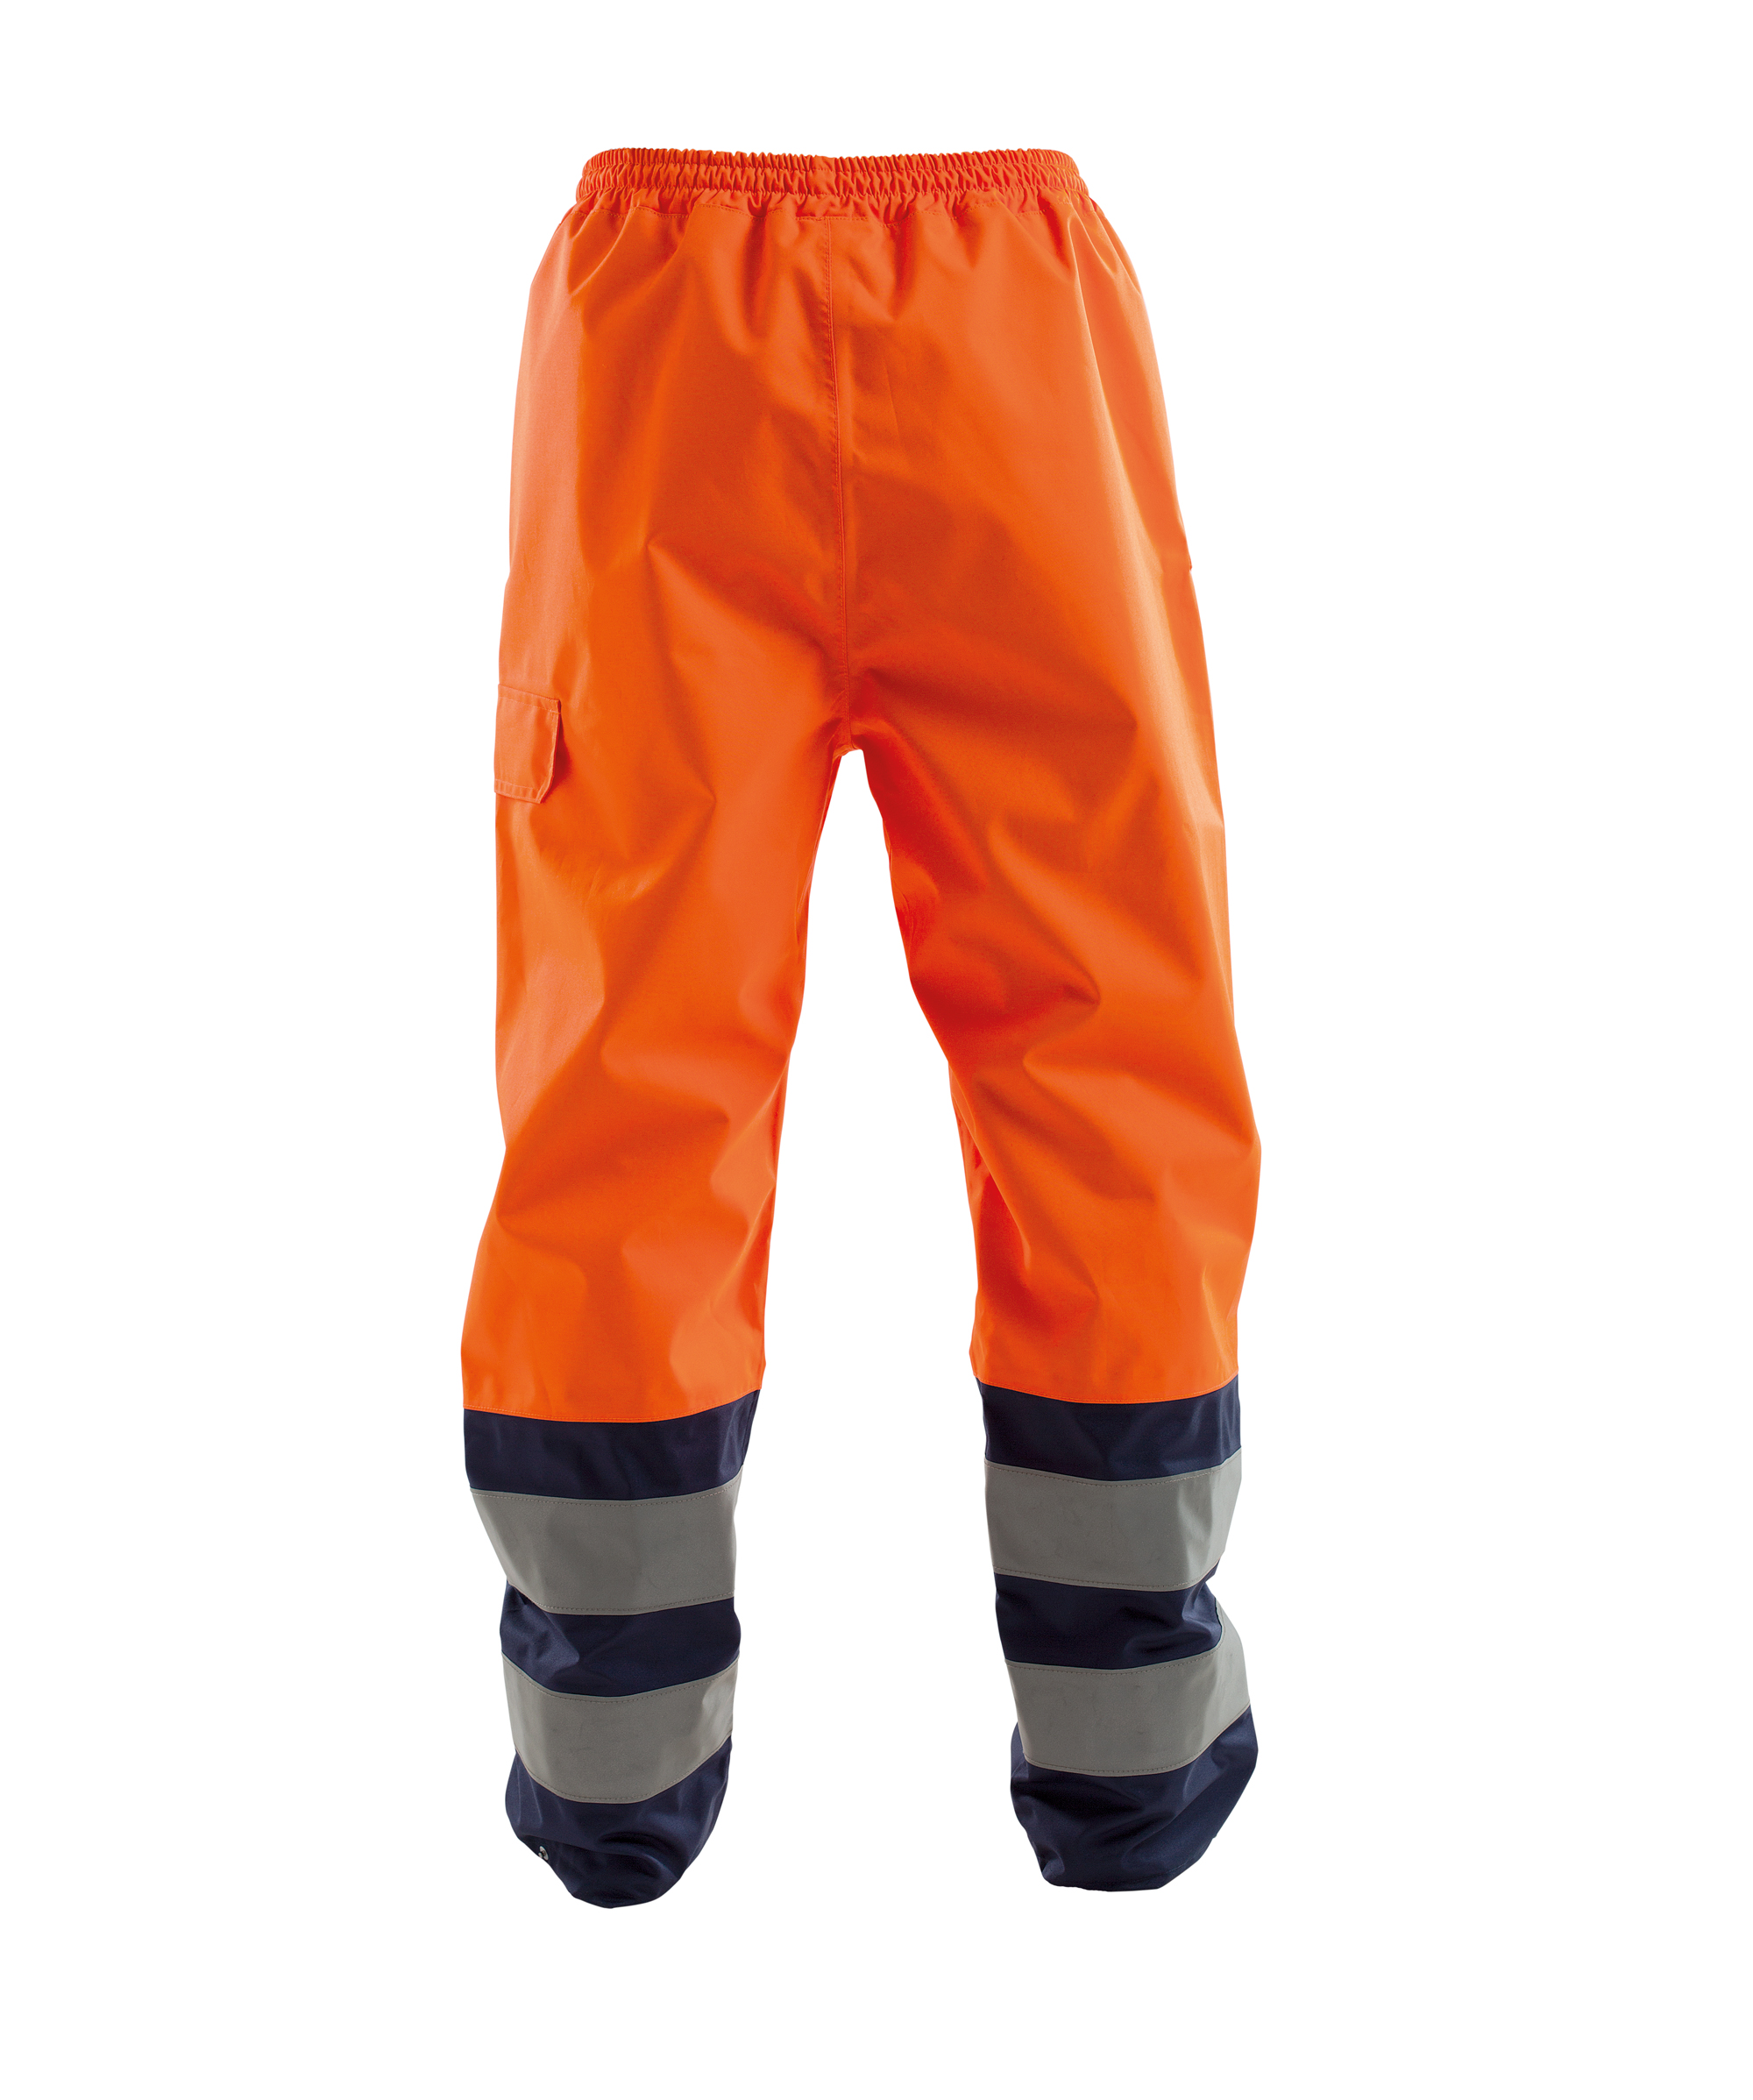 sola_high-visibility-waterproof-work-trousers_fluo-orange-navy_back.jpg